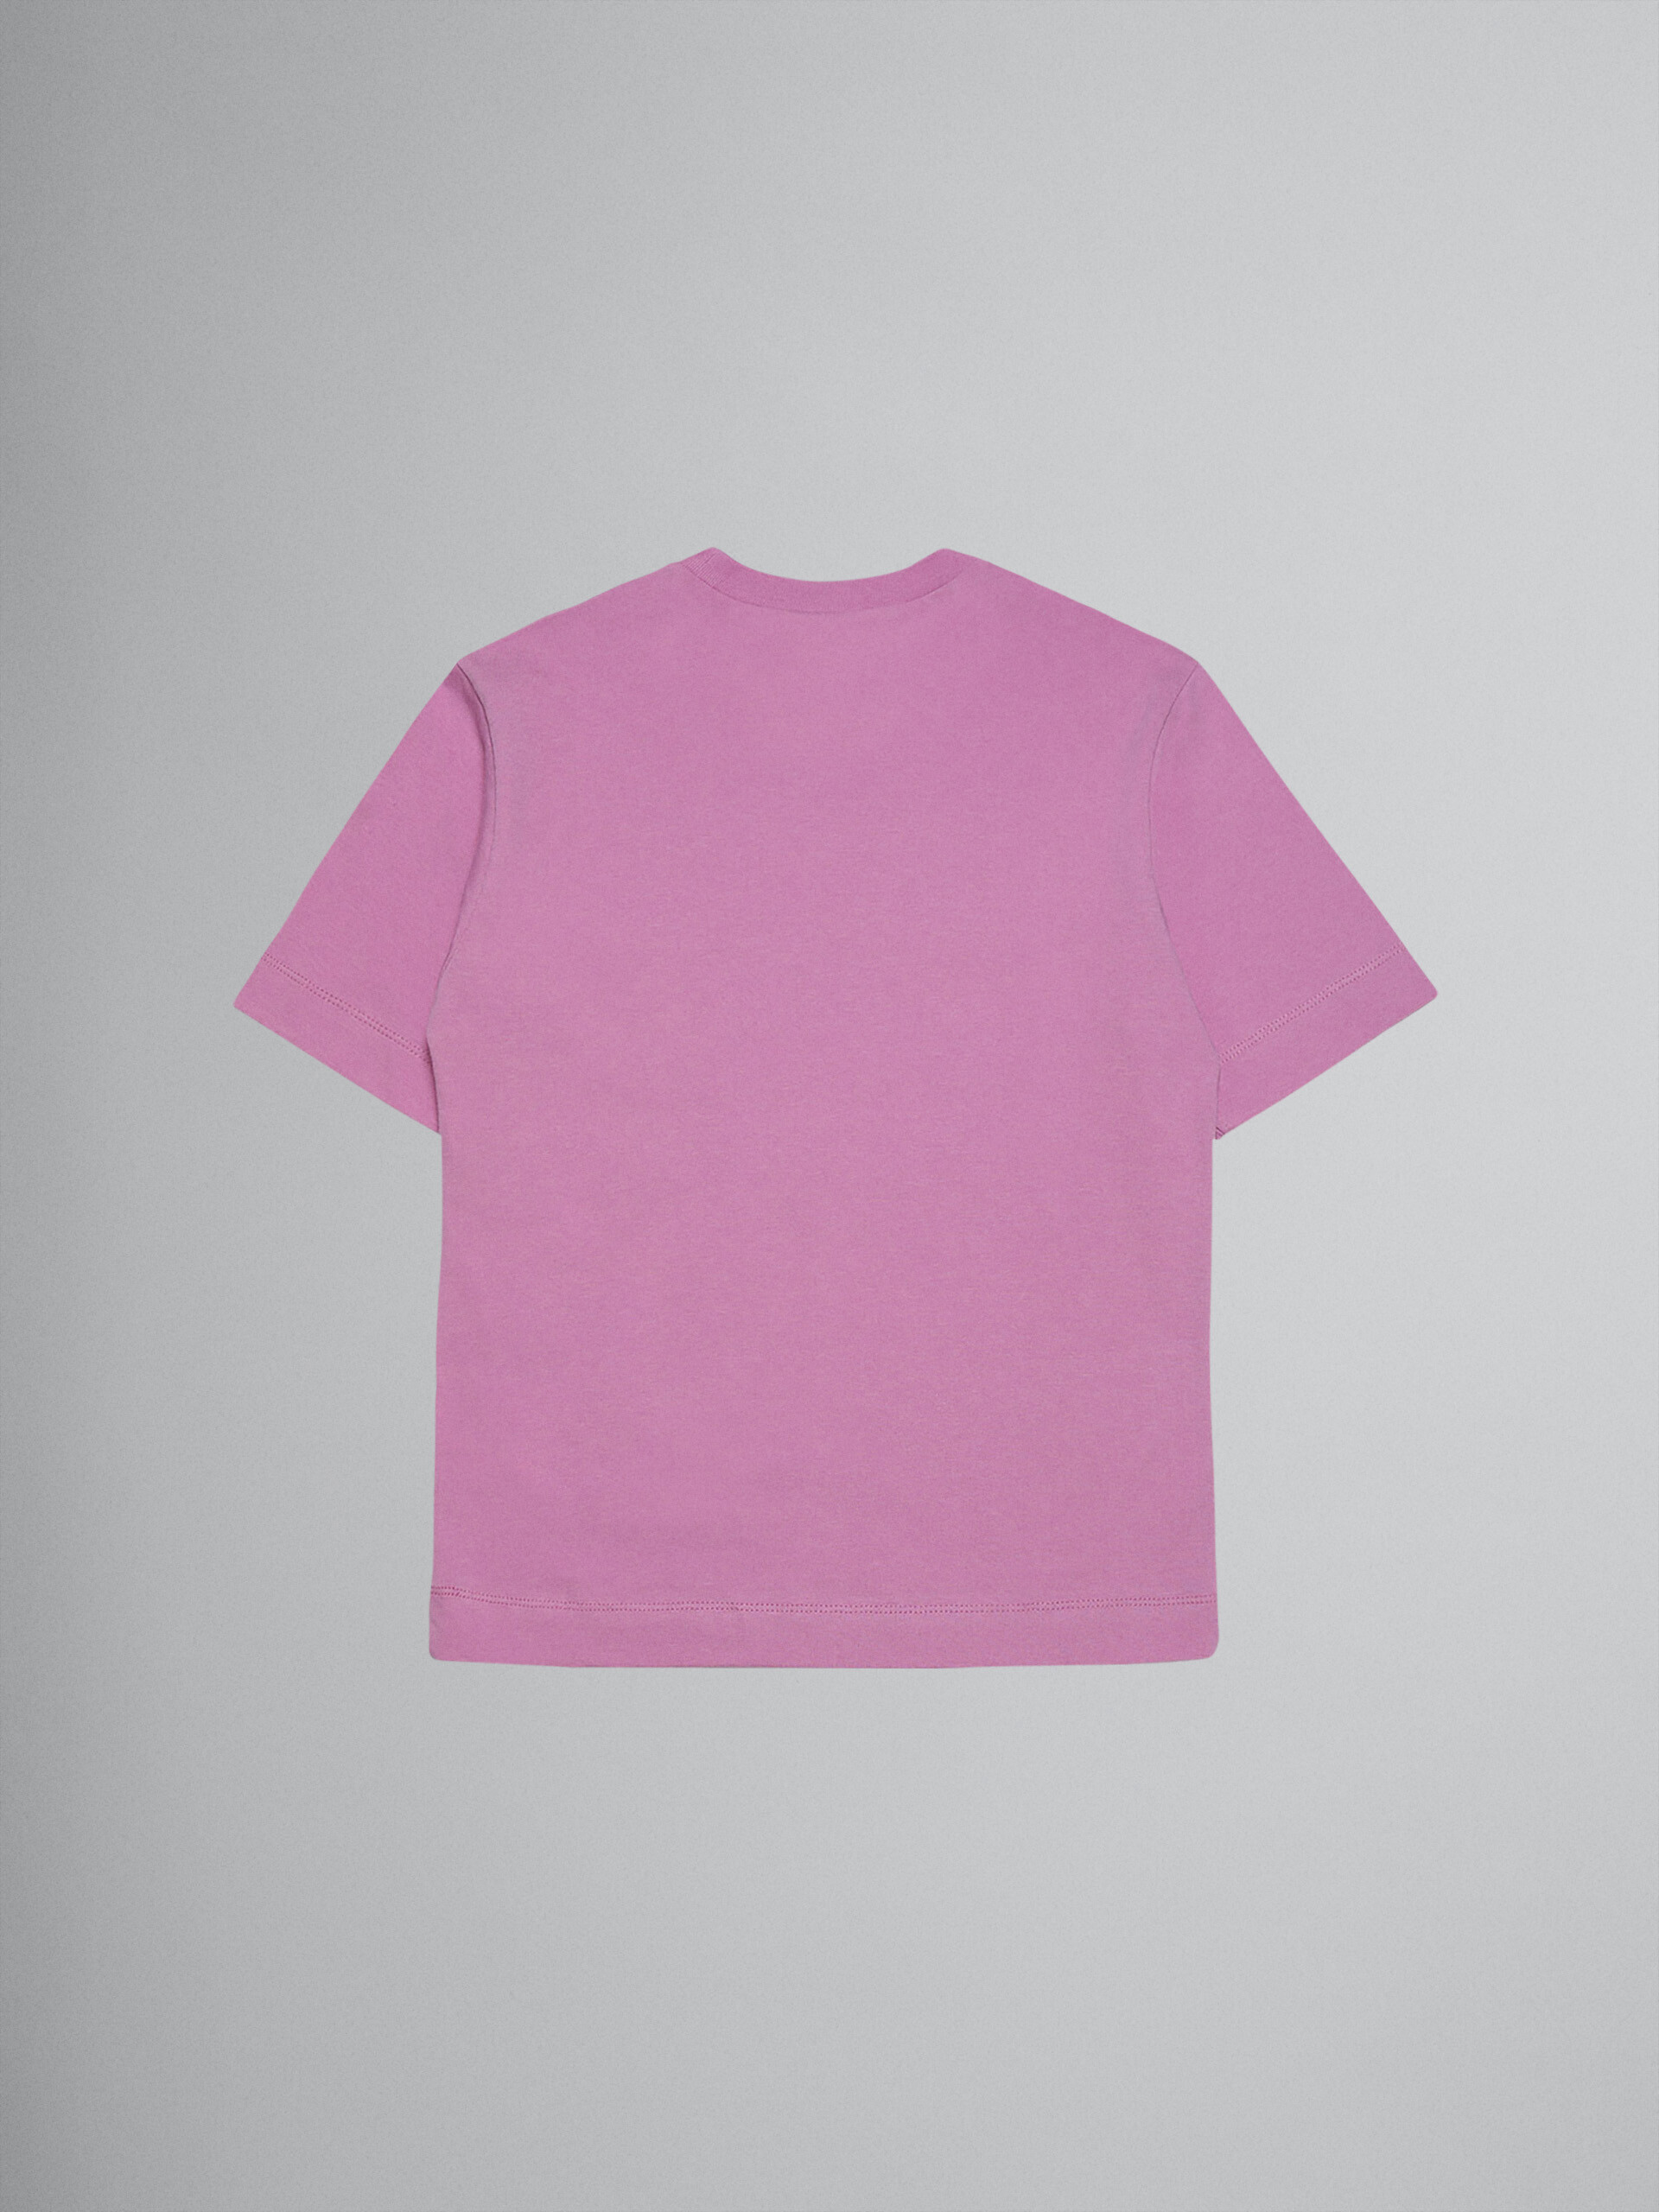 „M“ T-Shirt aus rosafarbenem Baumwolljersey - T-shirts - Image 2